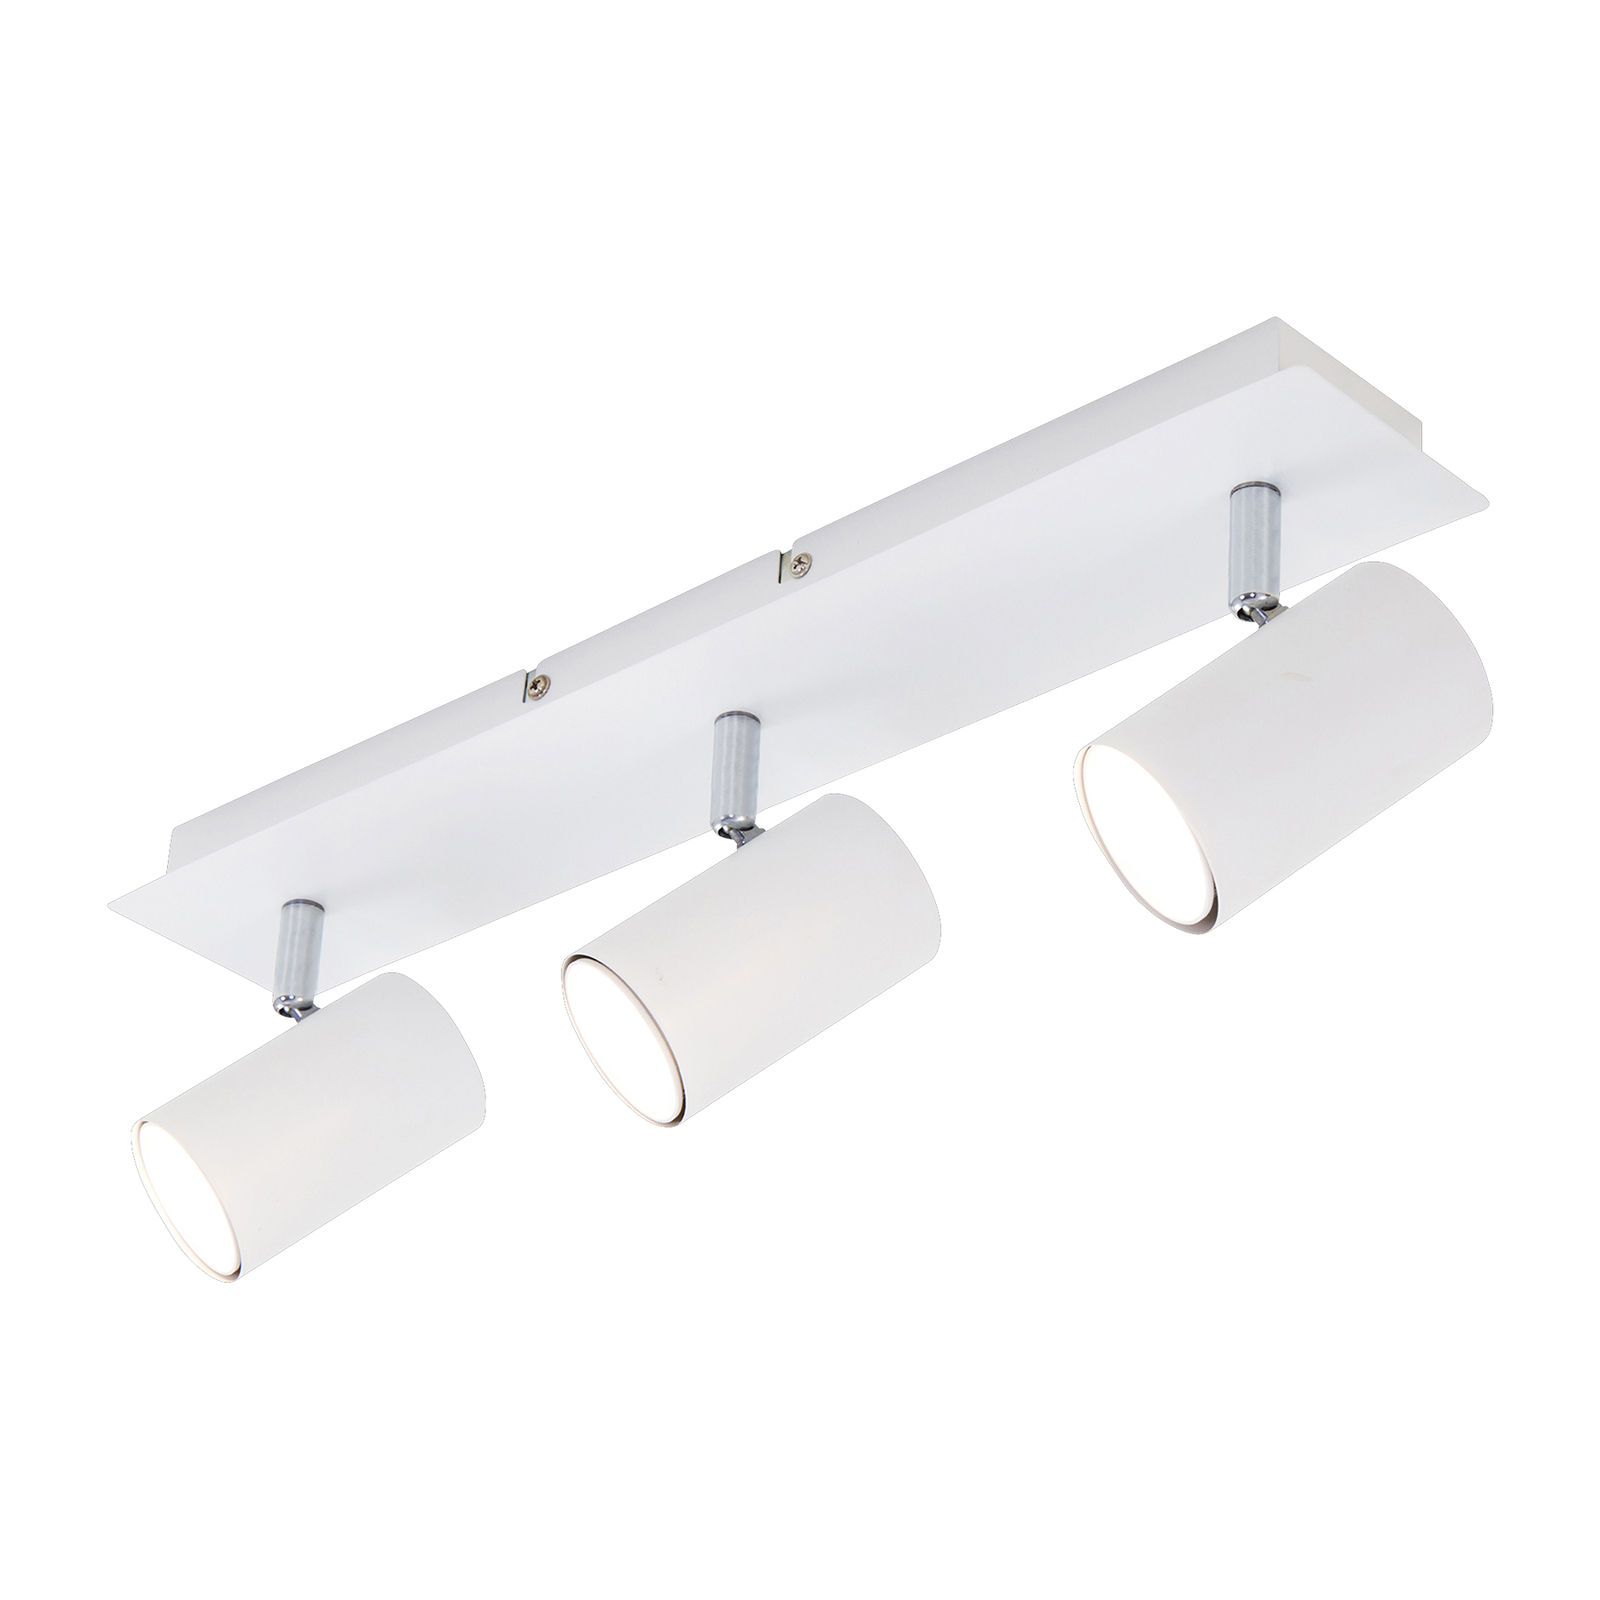 Plafonnier 2857-036, inclinable, à 3 lampes, blanc